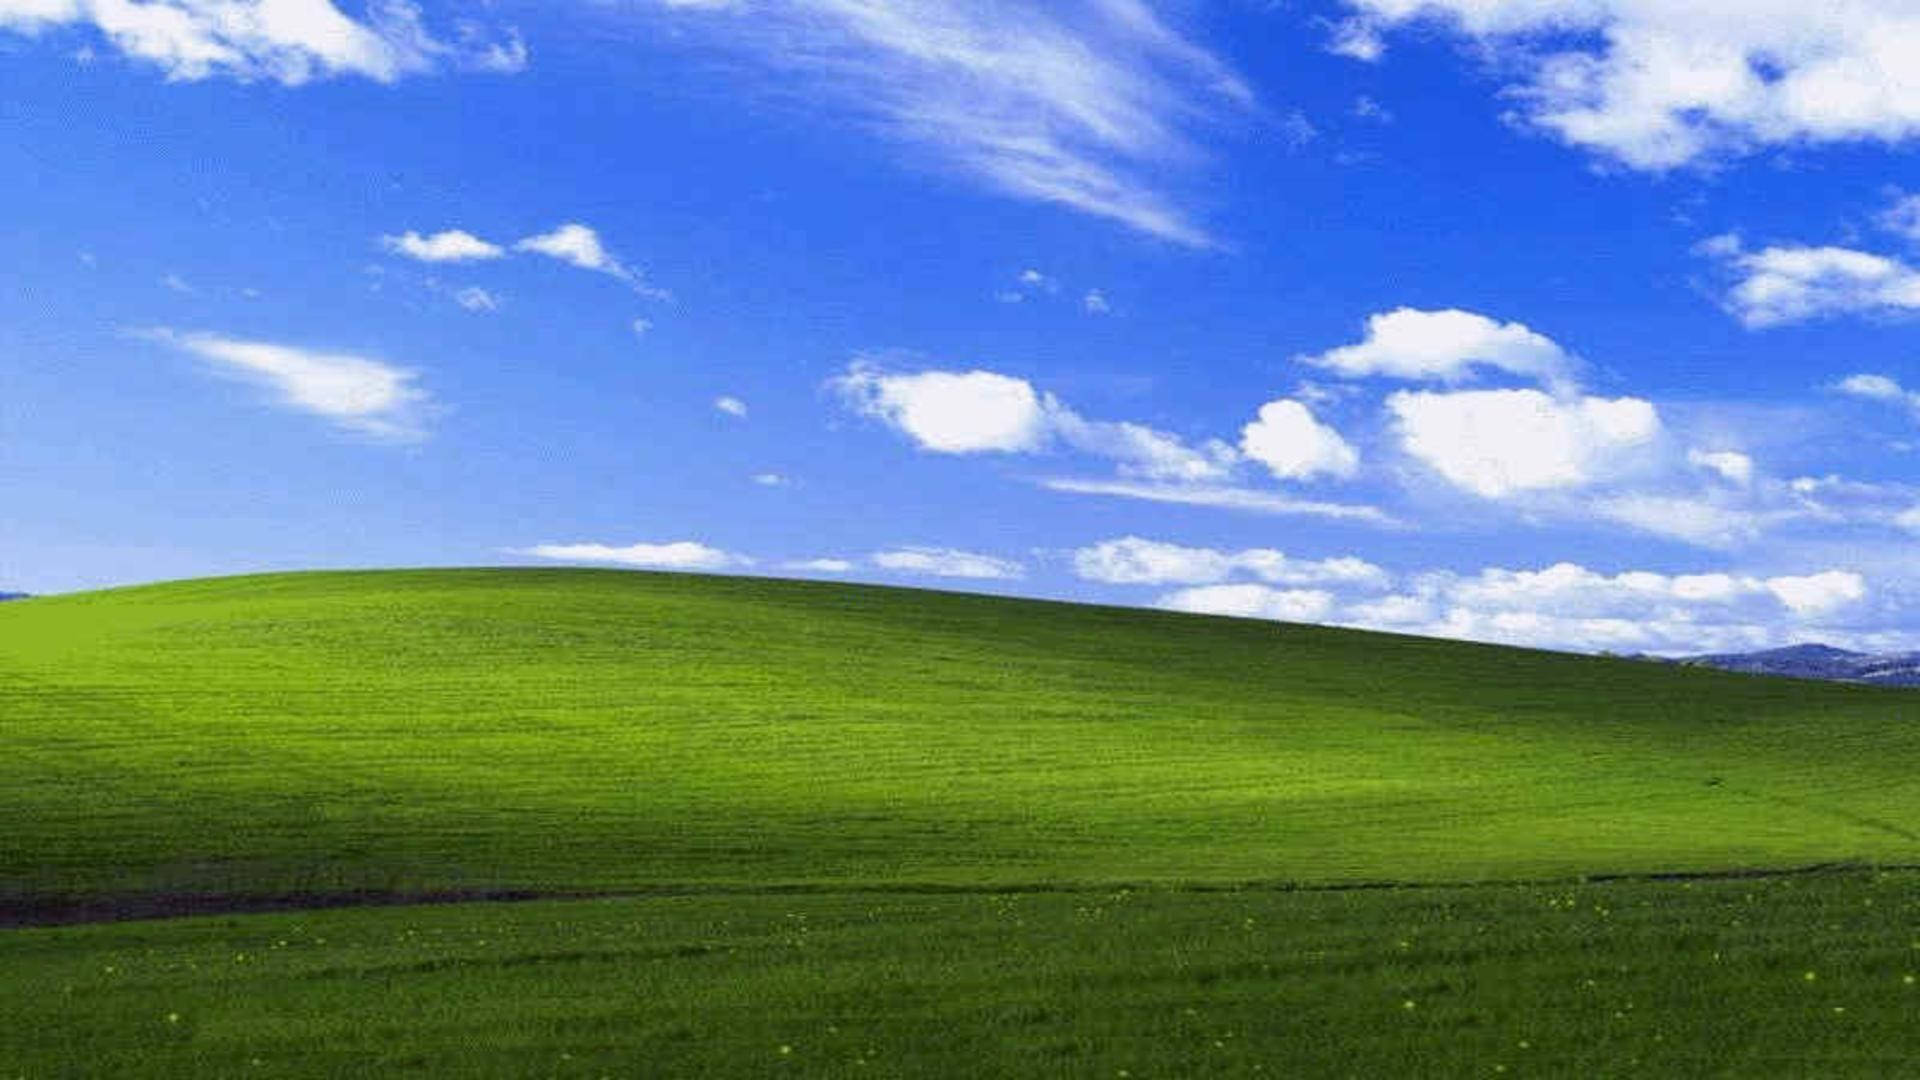  Microsoft Hintergrundbild 1920x1080. Free Microsoft Desktop Wallpaper Downloads, Microsoft Desktop Wallpaper for FREE